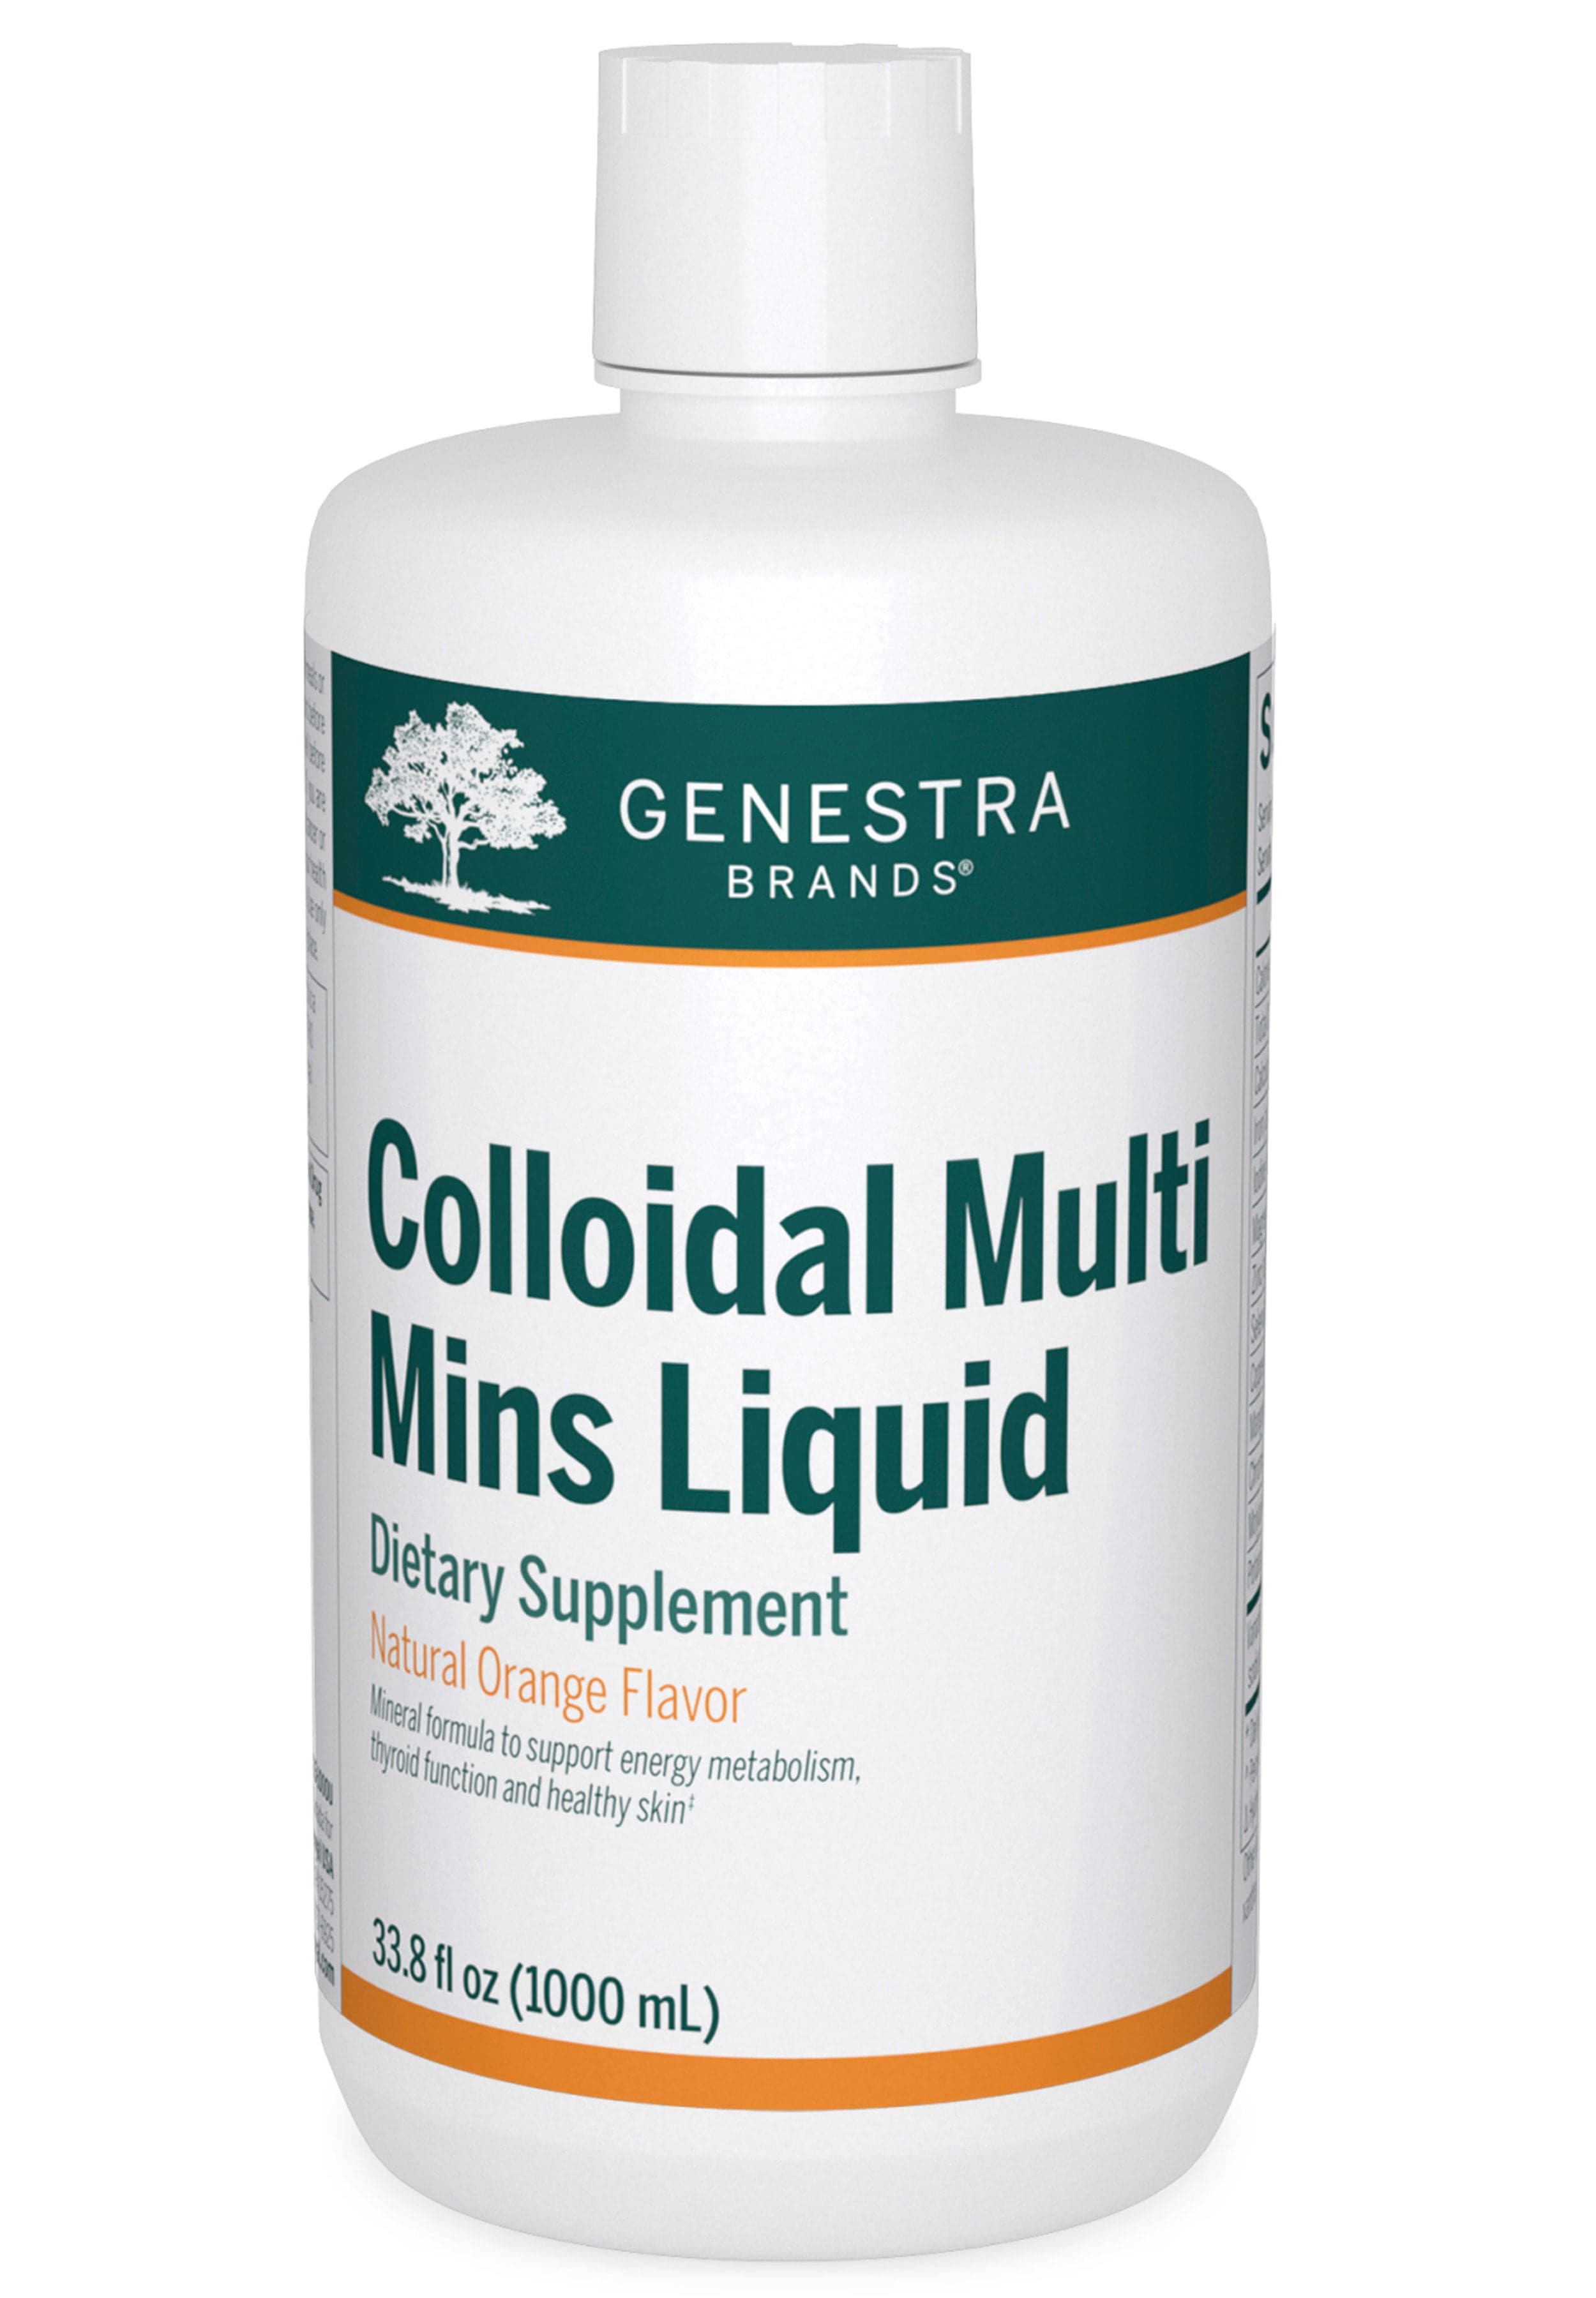 Genestra Brands Colloidal Multi Mins Liquid